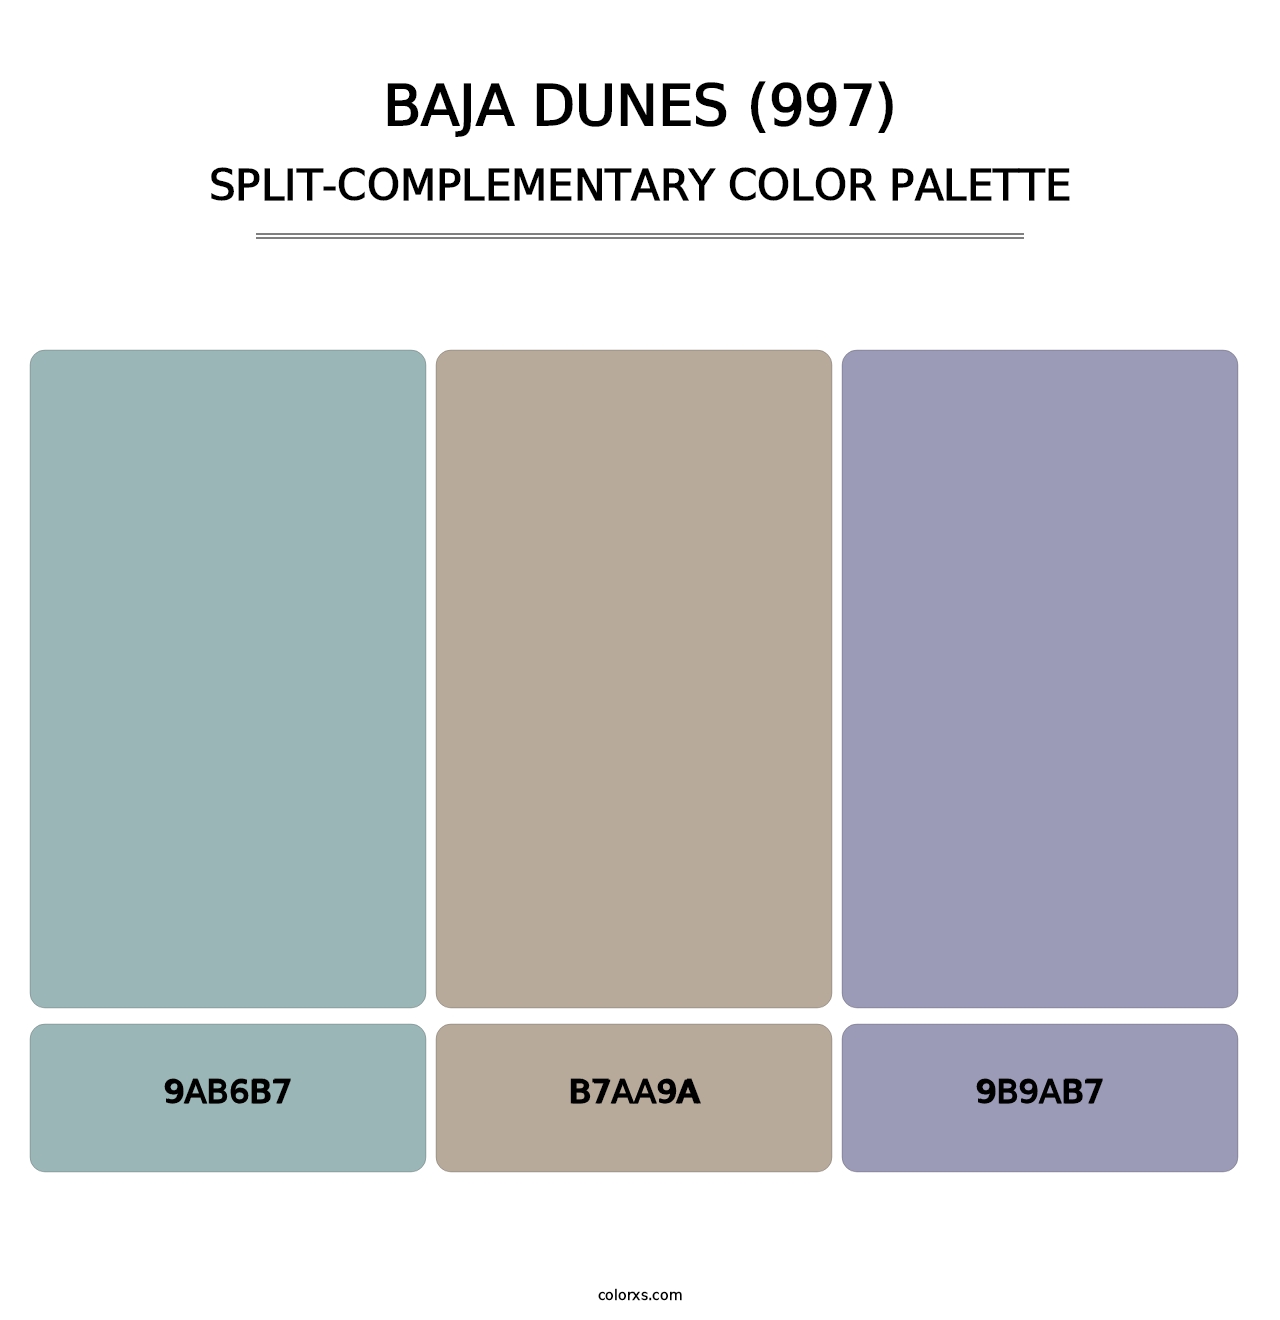 Baja Dunes (997) - Split-Complementary Color Palette